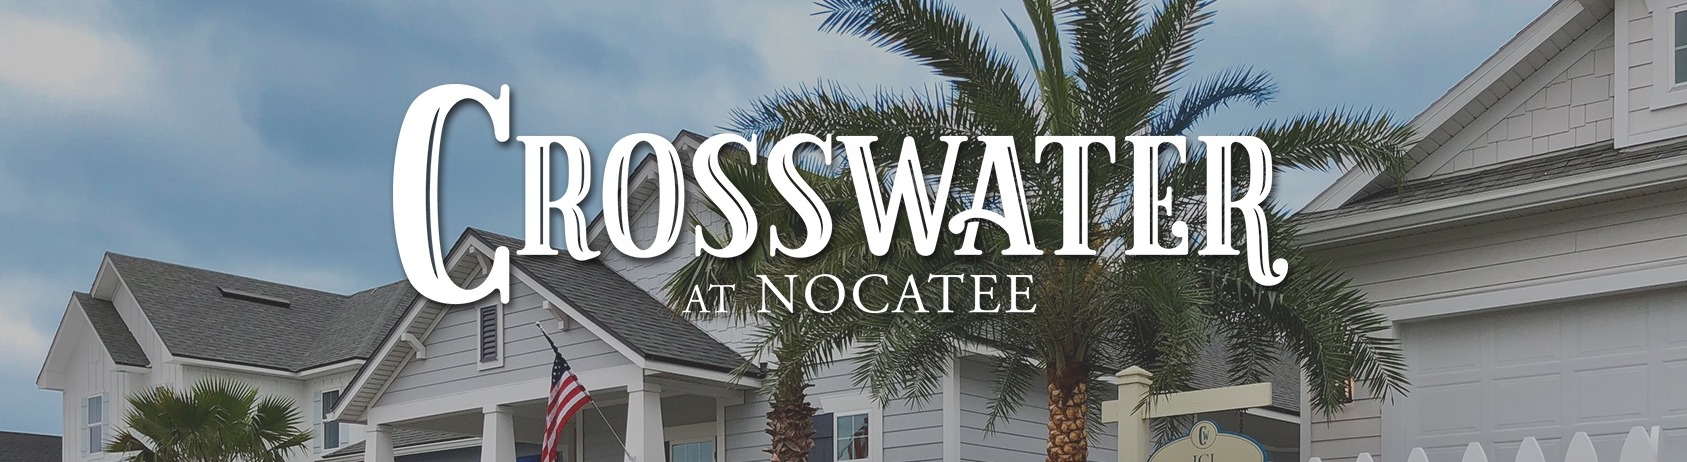 Crosswater at Nocatee